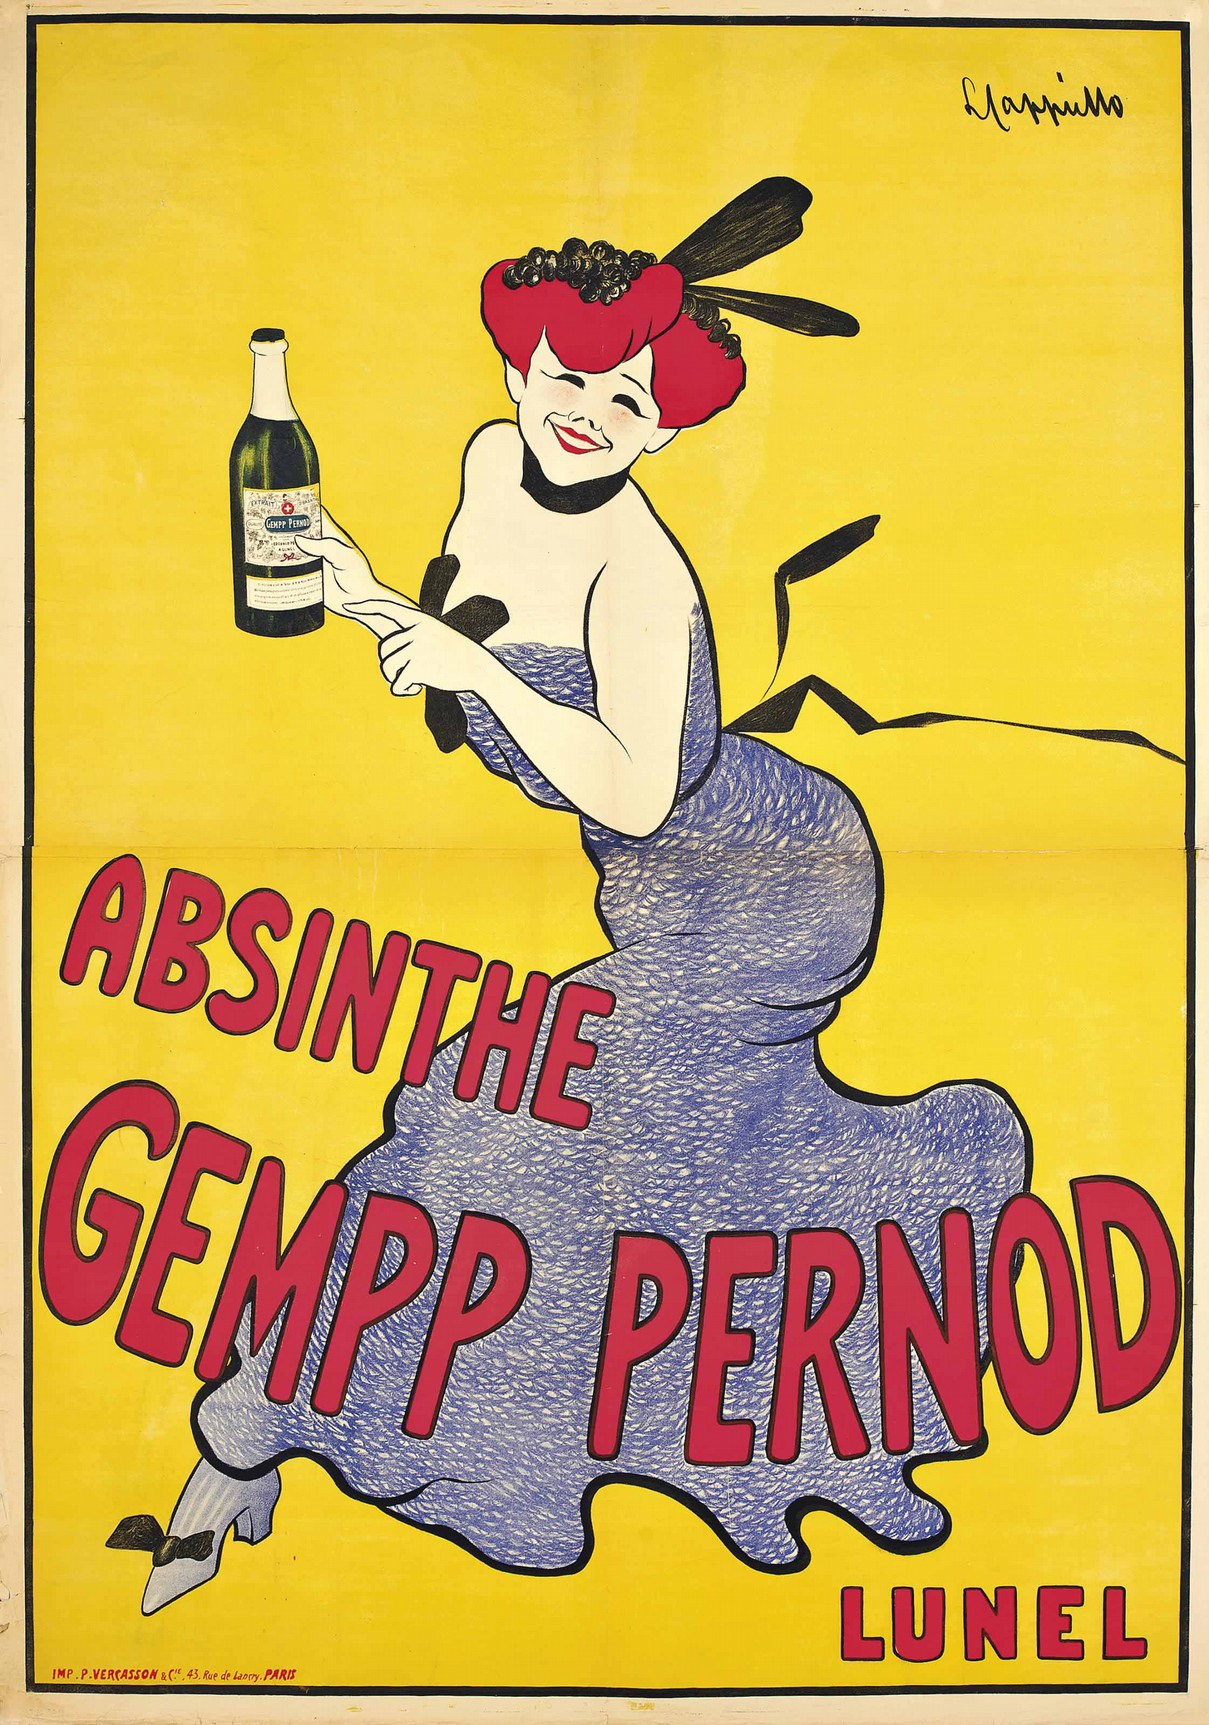 Manifesto Absinthe Gempp Pernod (Cappiello, 1903)